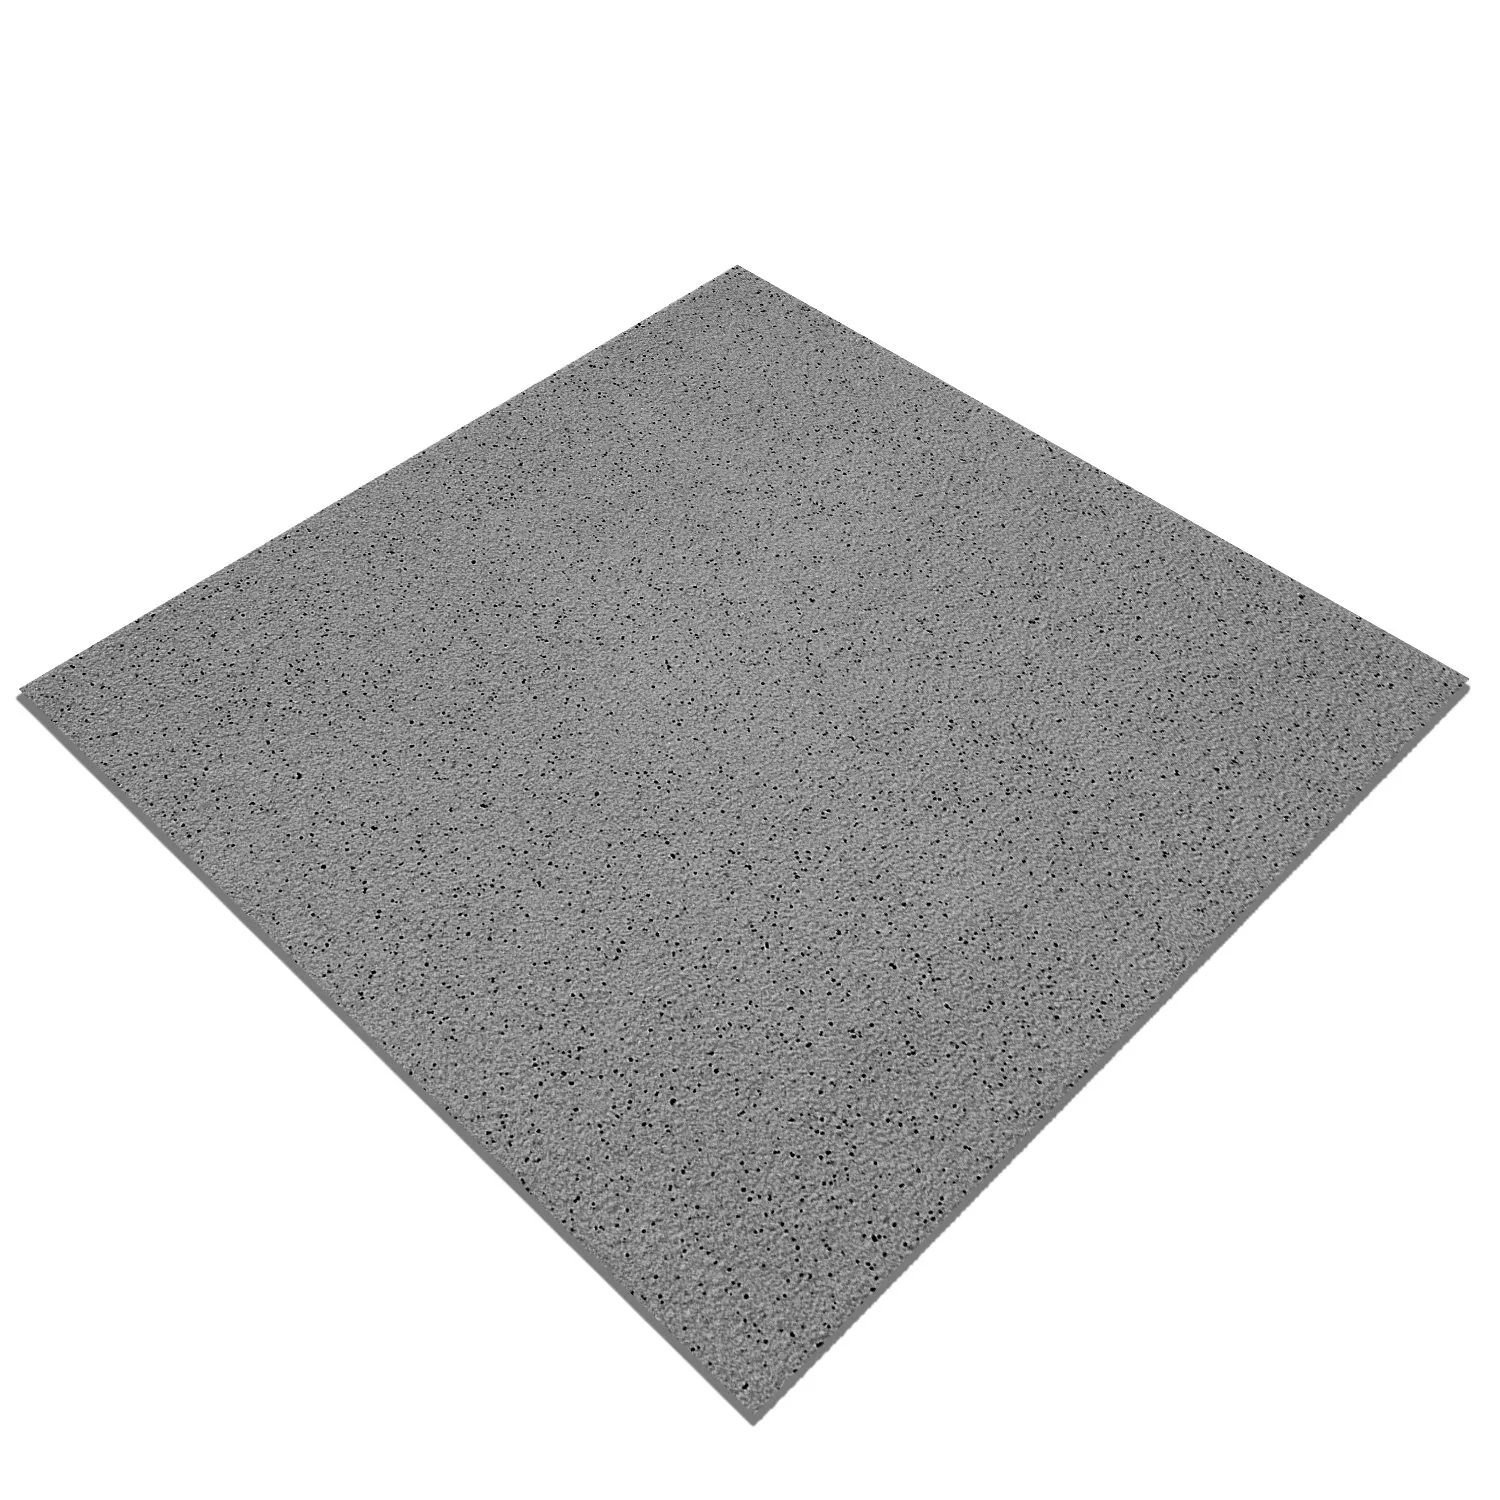 Floor Tiles Fine Grain R11/B Anthracite 20x20cm